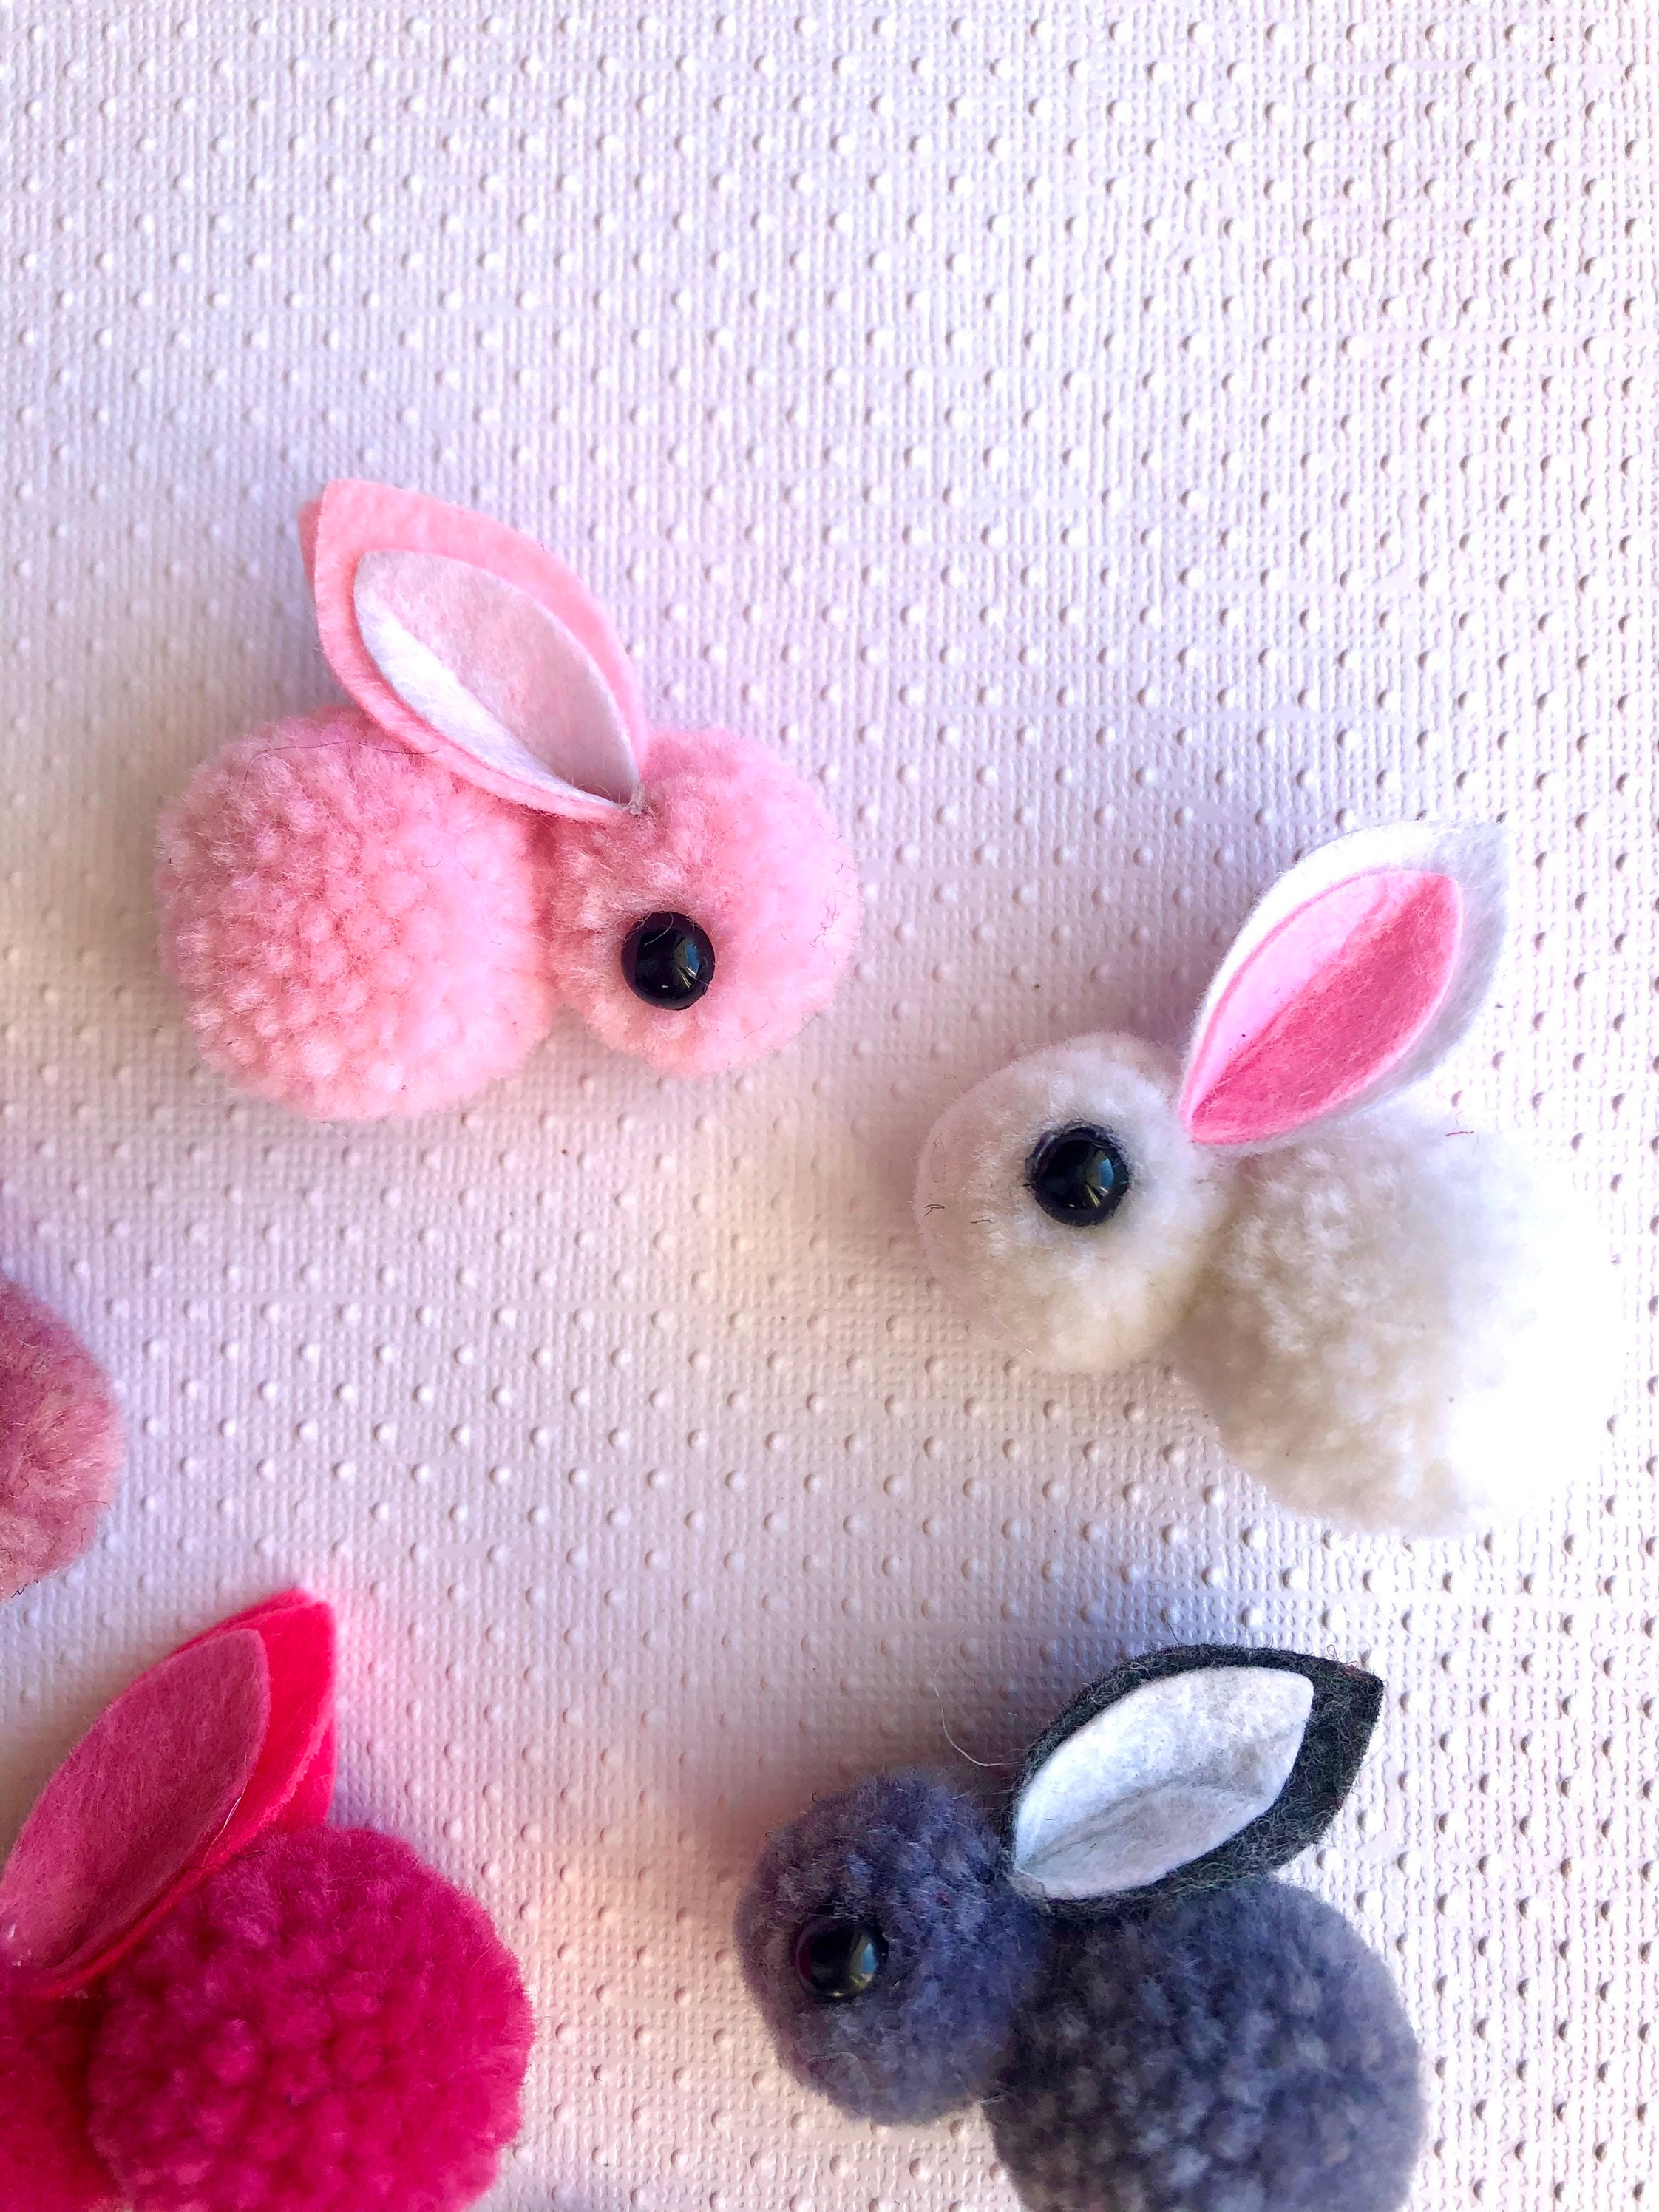 Mini Fabric Pom Poms Embellishments Pastel Easter Spring Headband Crafts  Decorating 